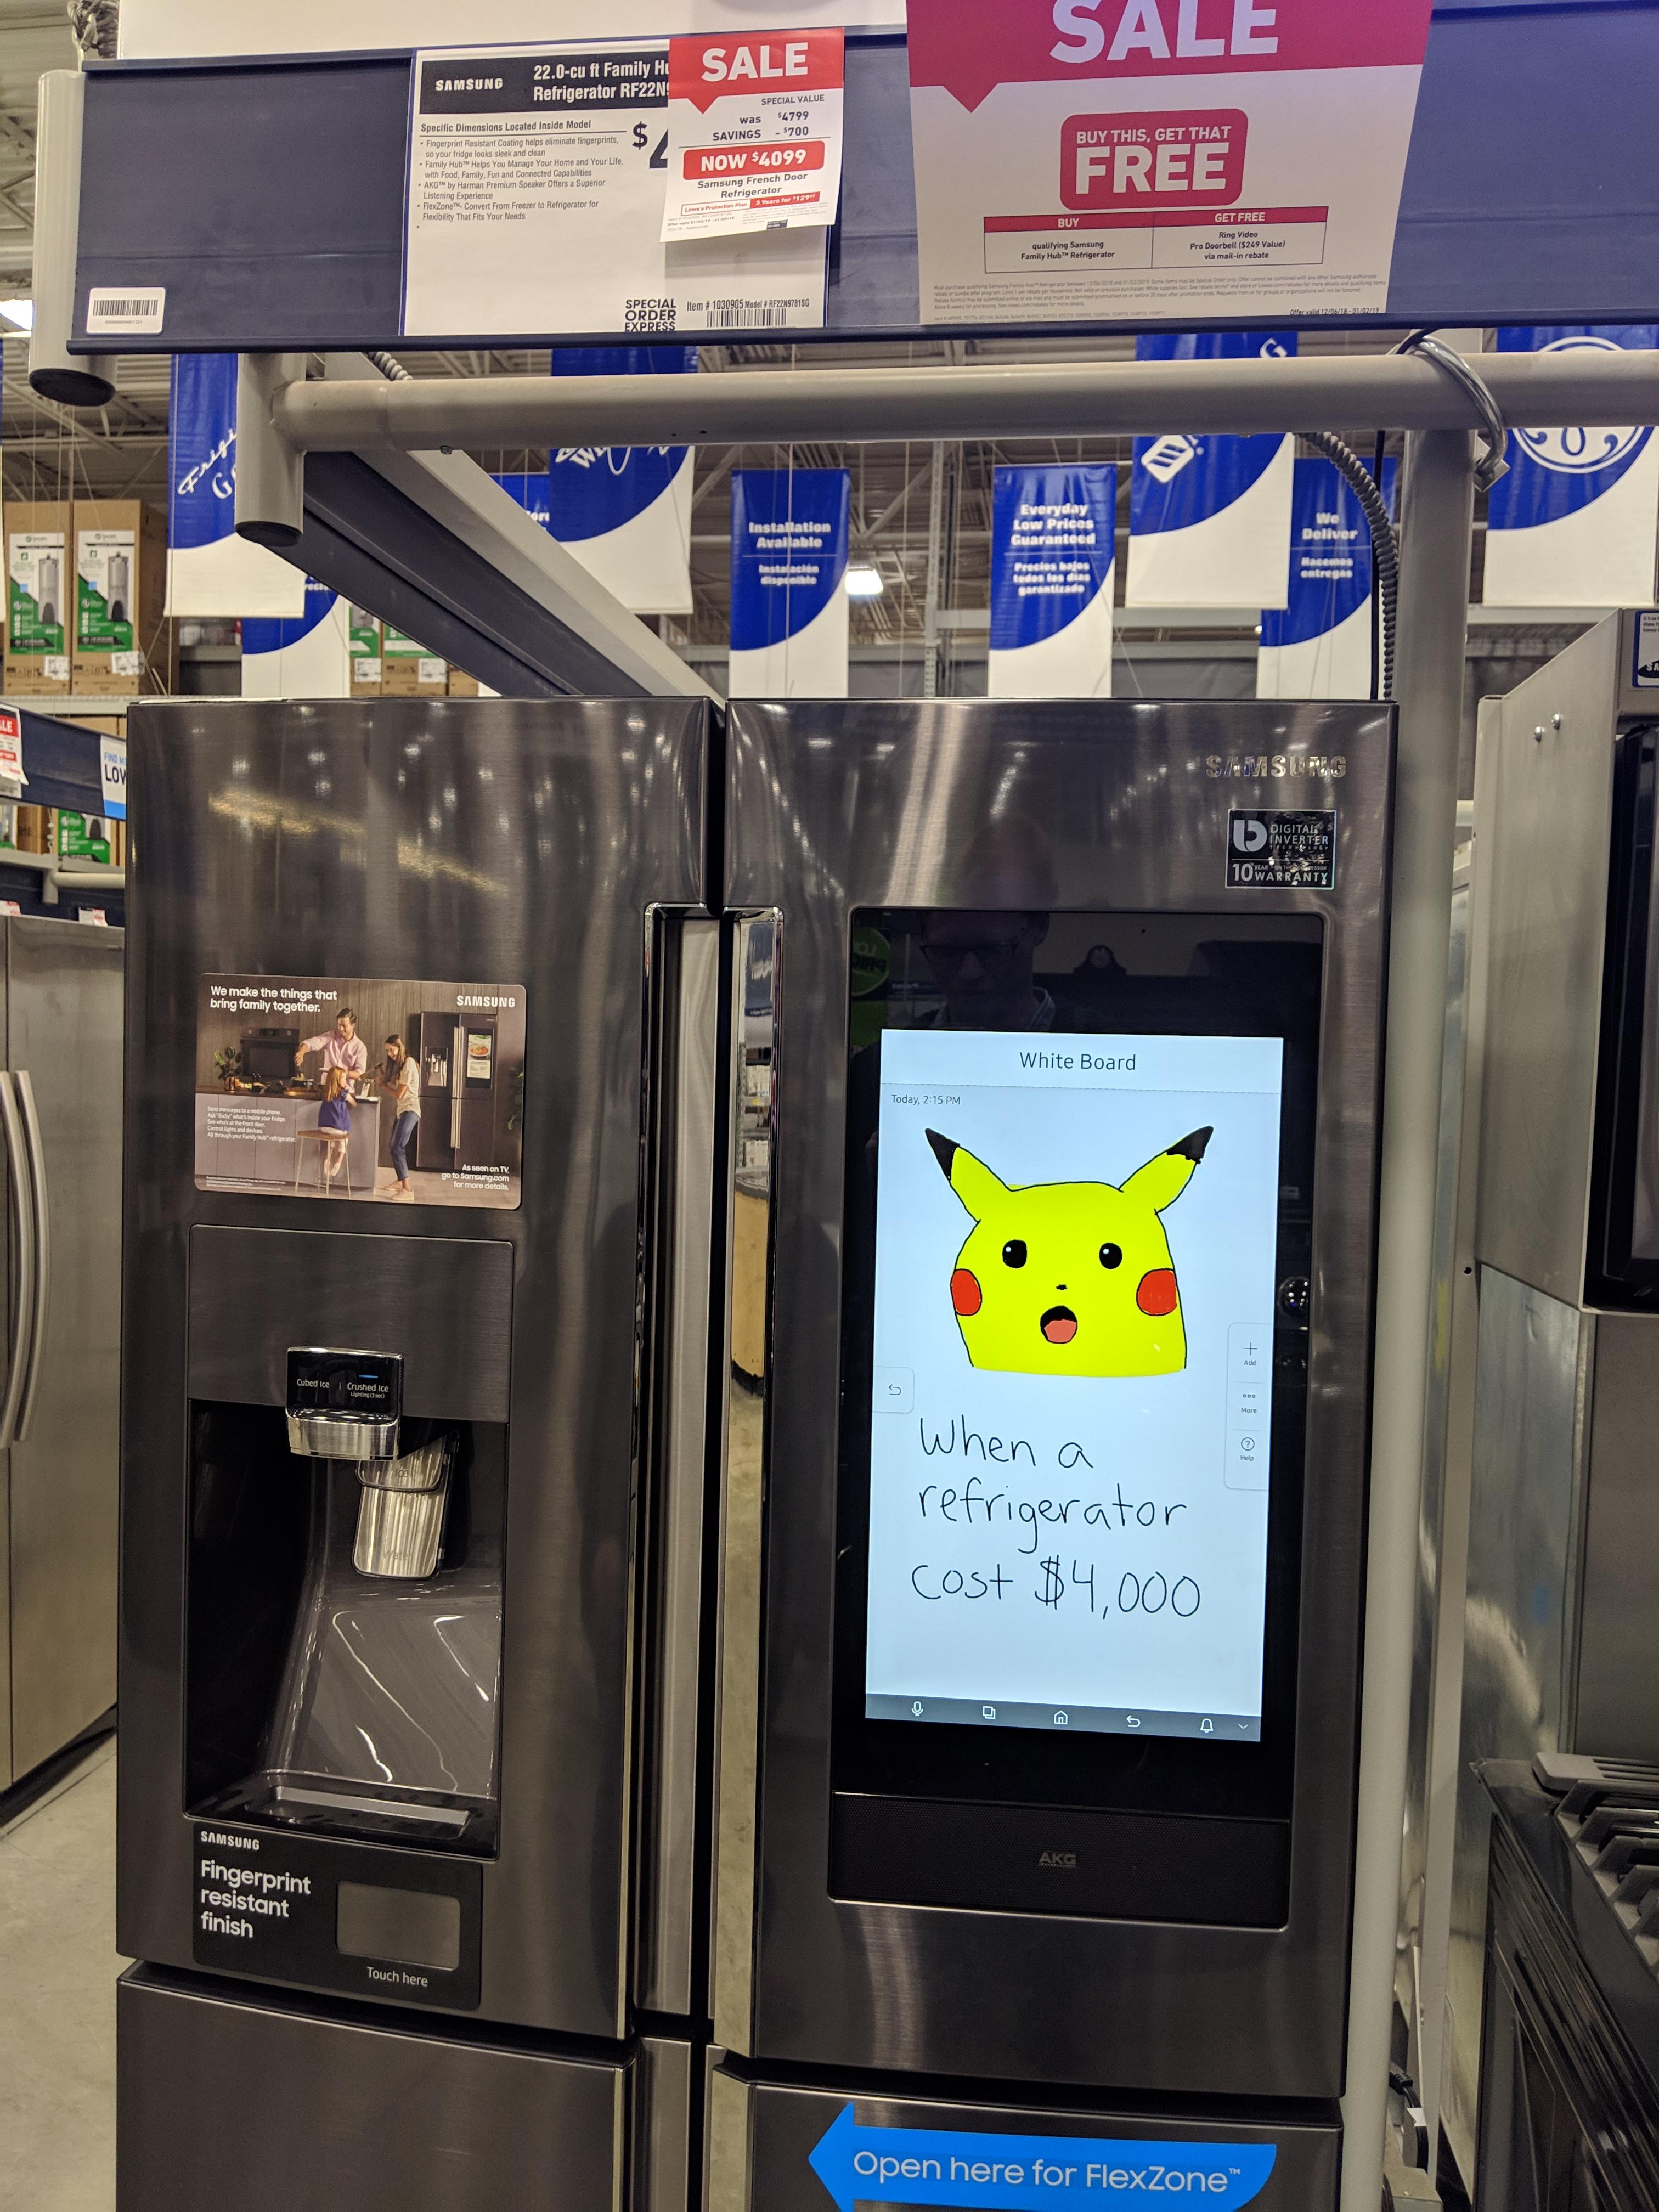 pikachu meme refrigerator - Sale Free When a refrigerator Cost 34.000 Opere for Hexo